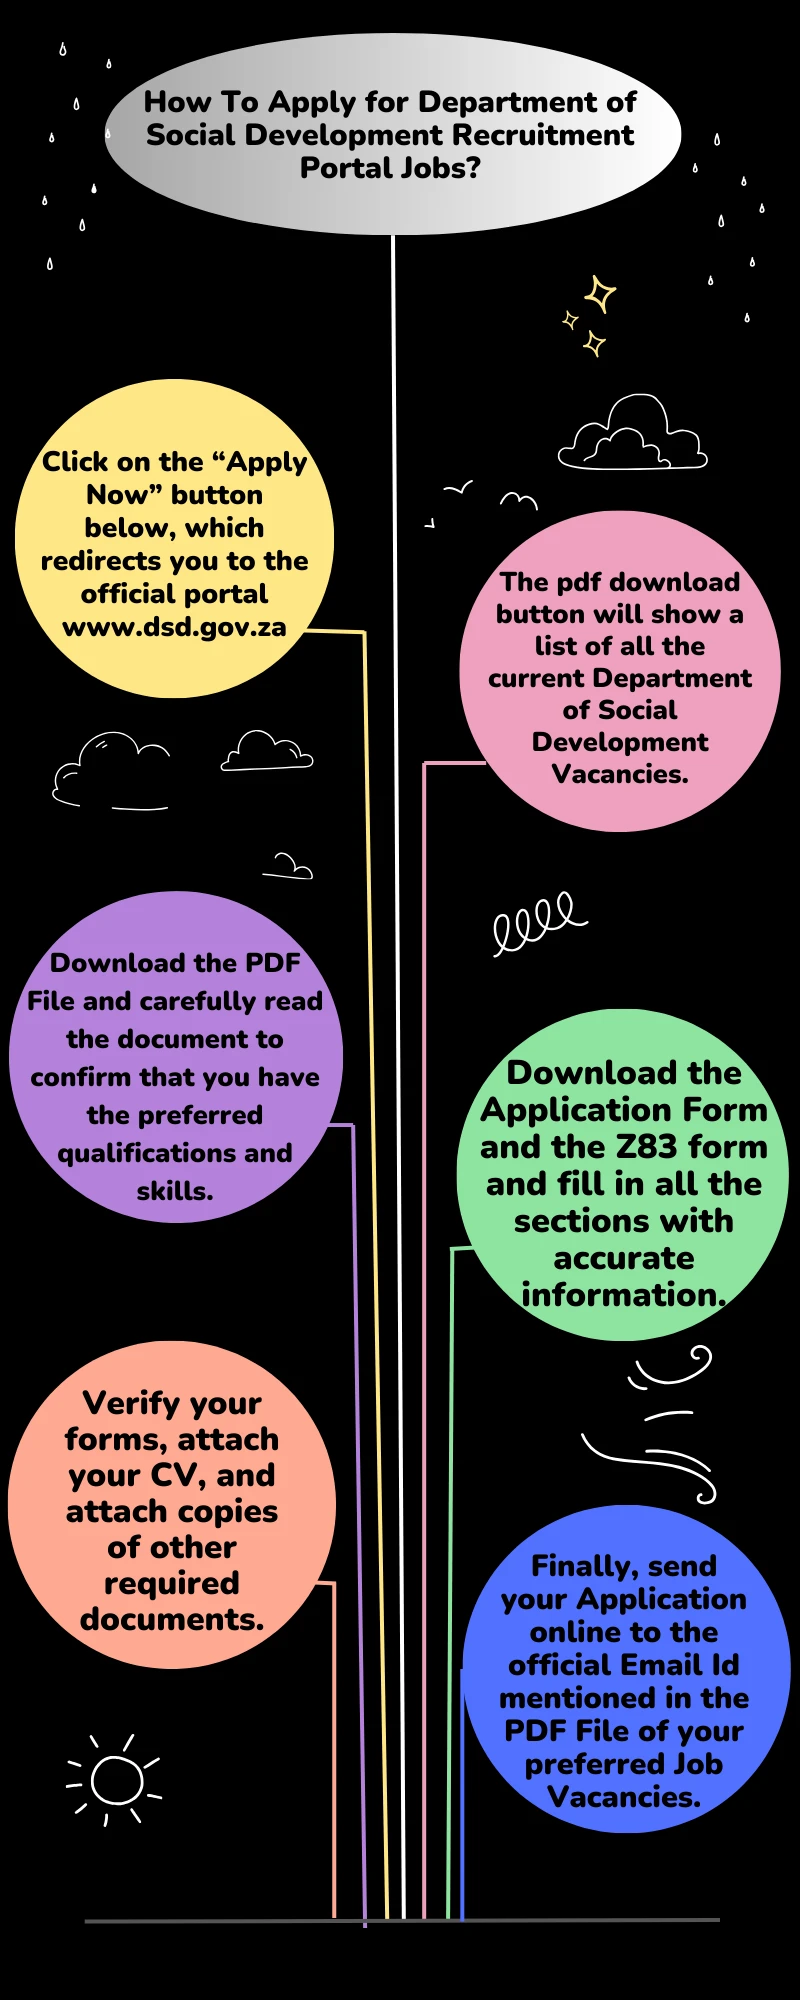 How To Apply for Department of Social Development Recruitment Portal Jobs?